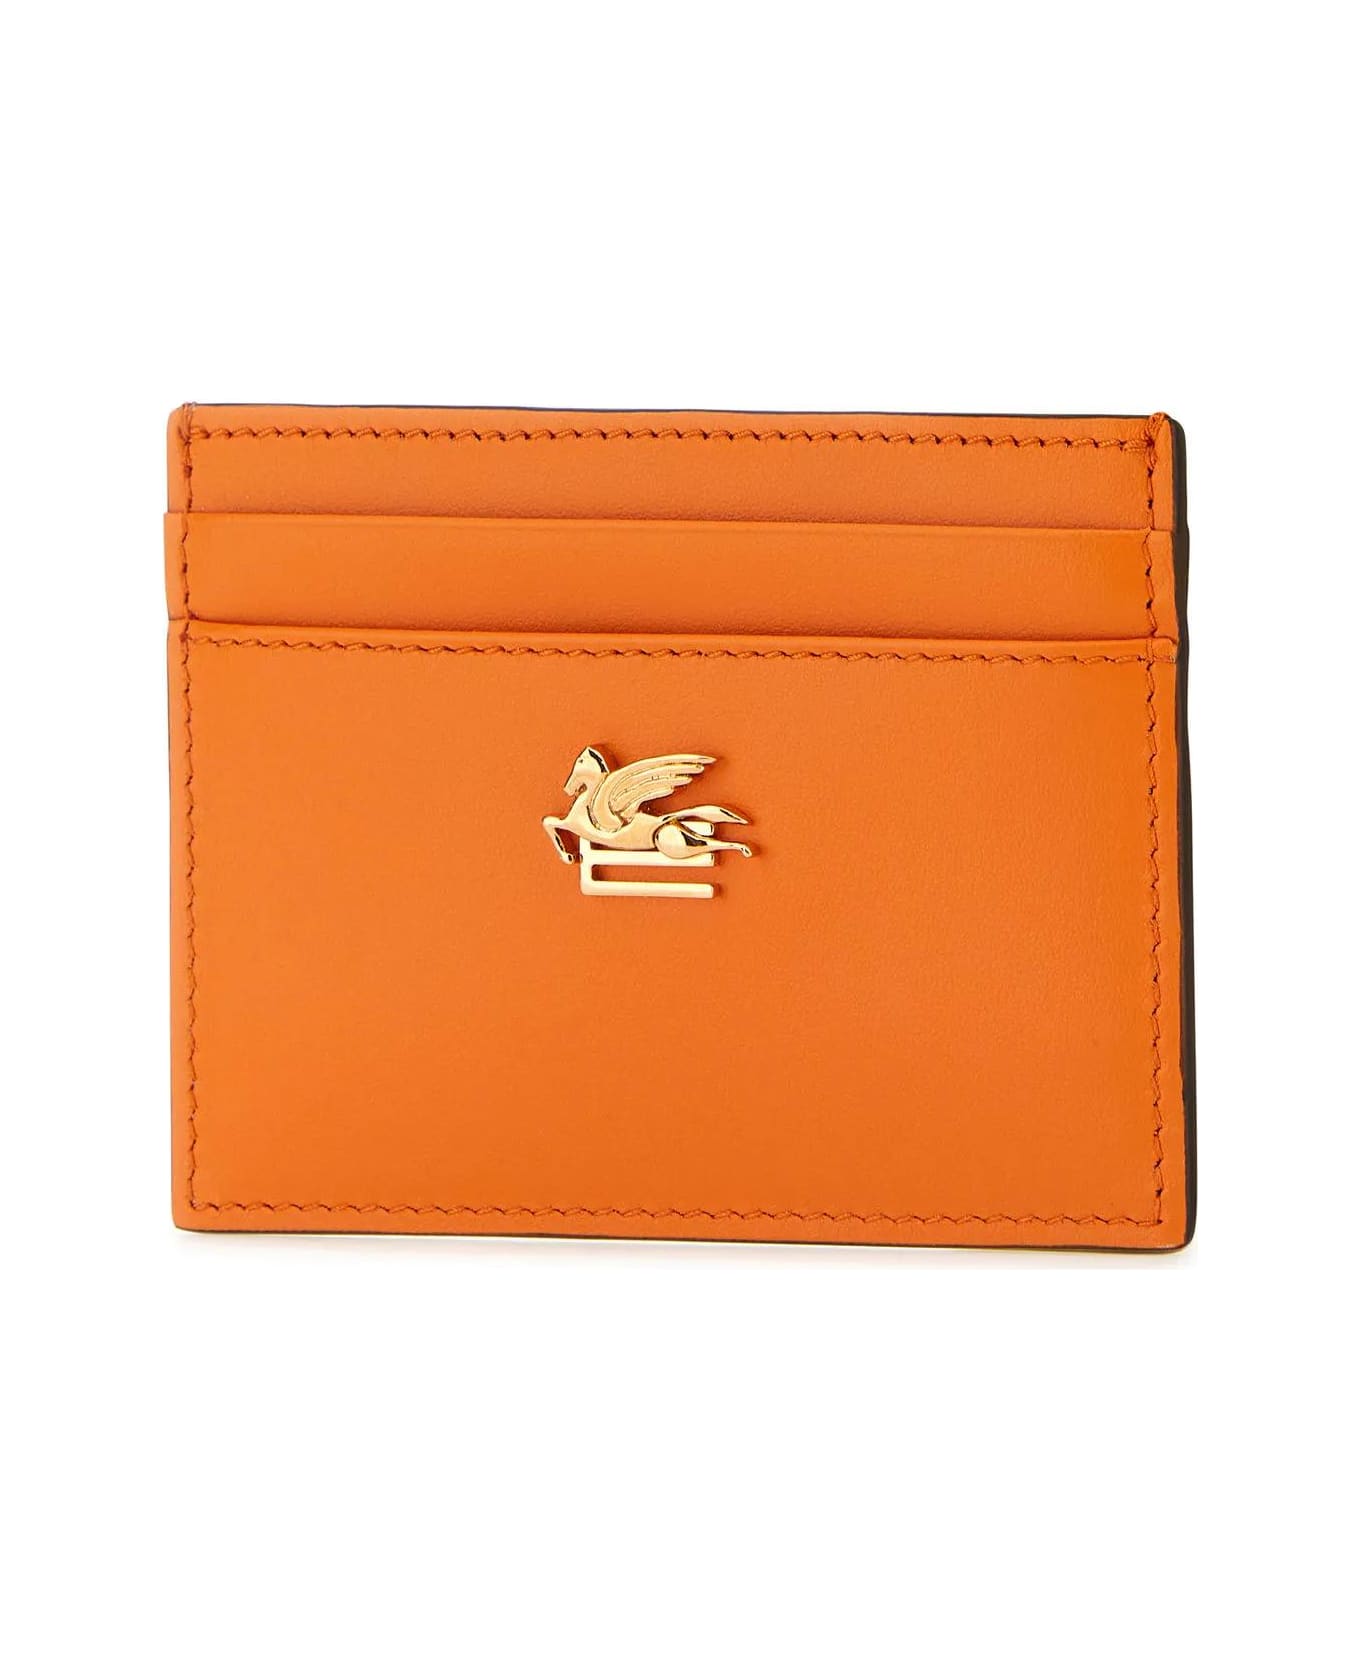 Etro Orange Leather Cardholder - Orange